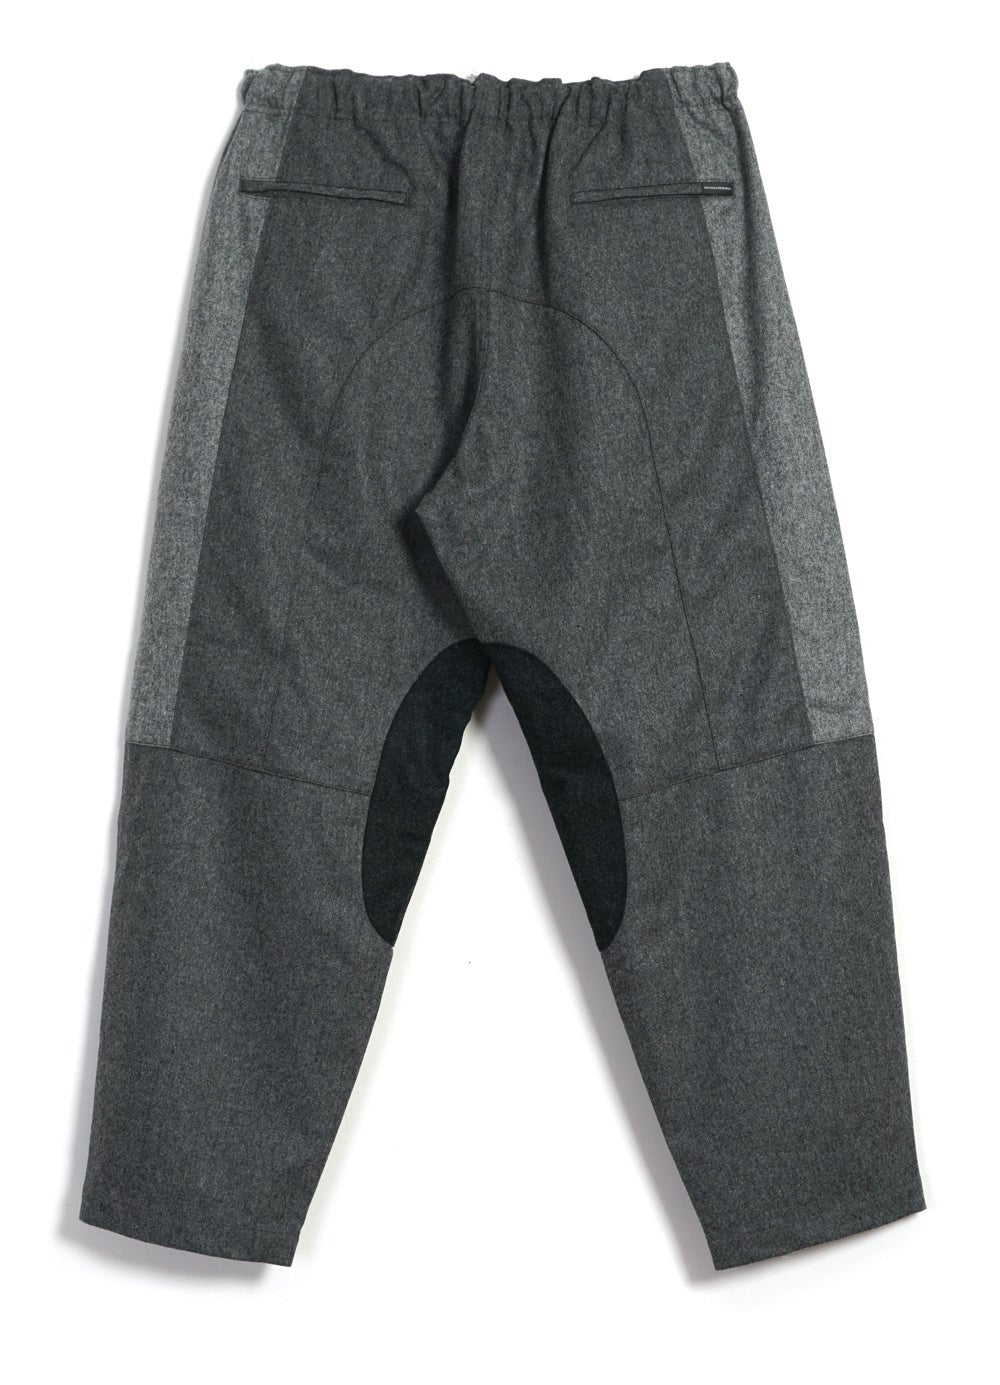 MOUNTAIN RESEARCH - TRACK PANTS | Grey - HANSEN Garments